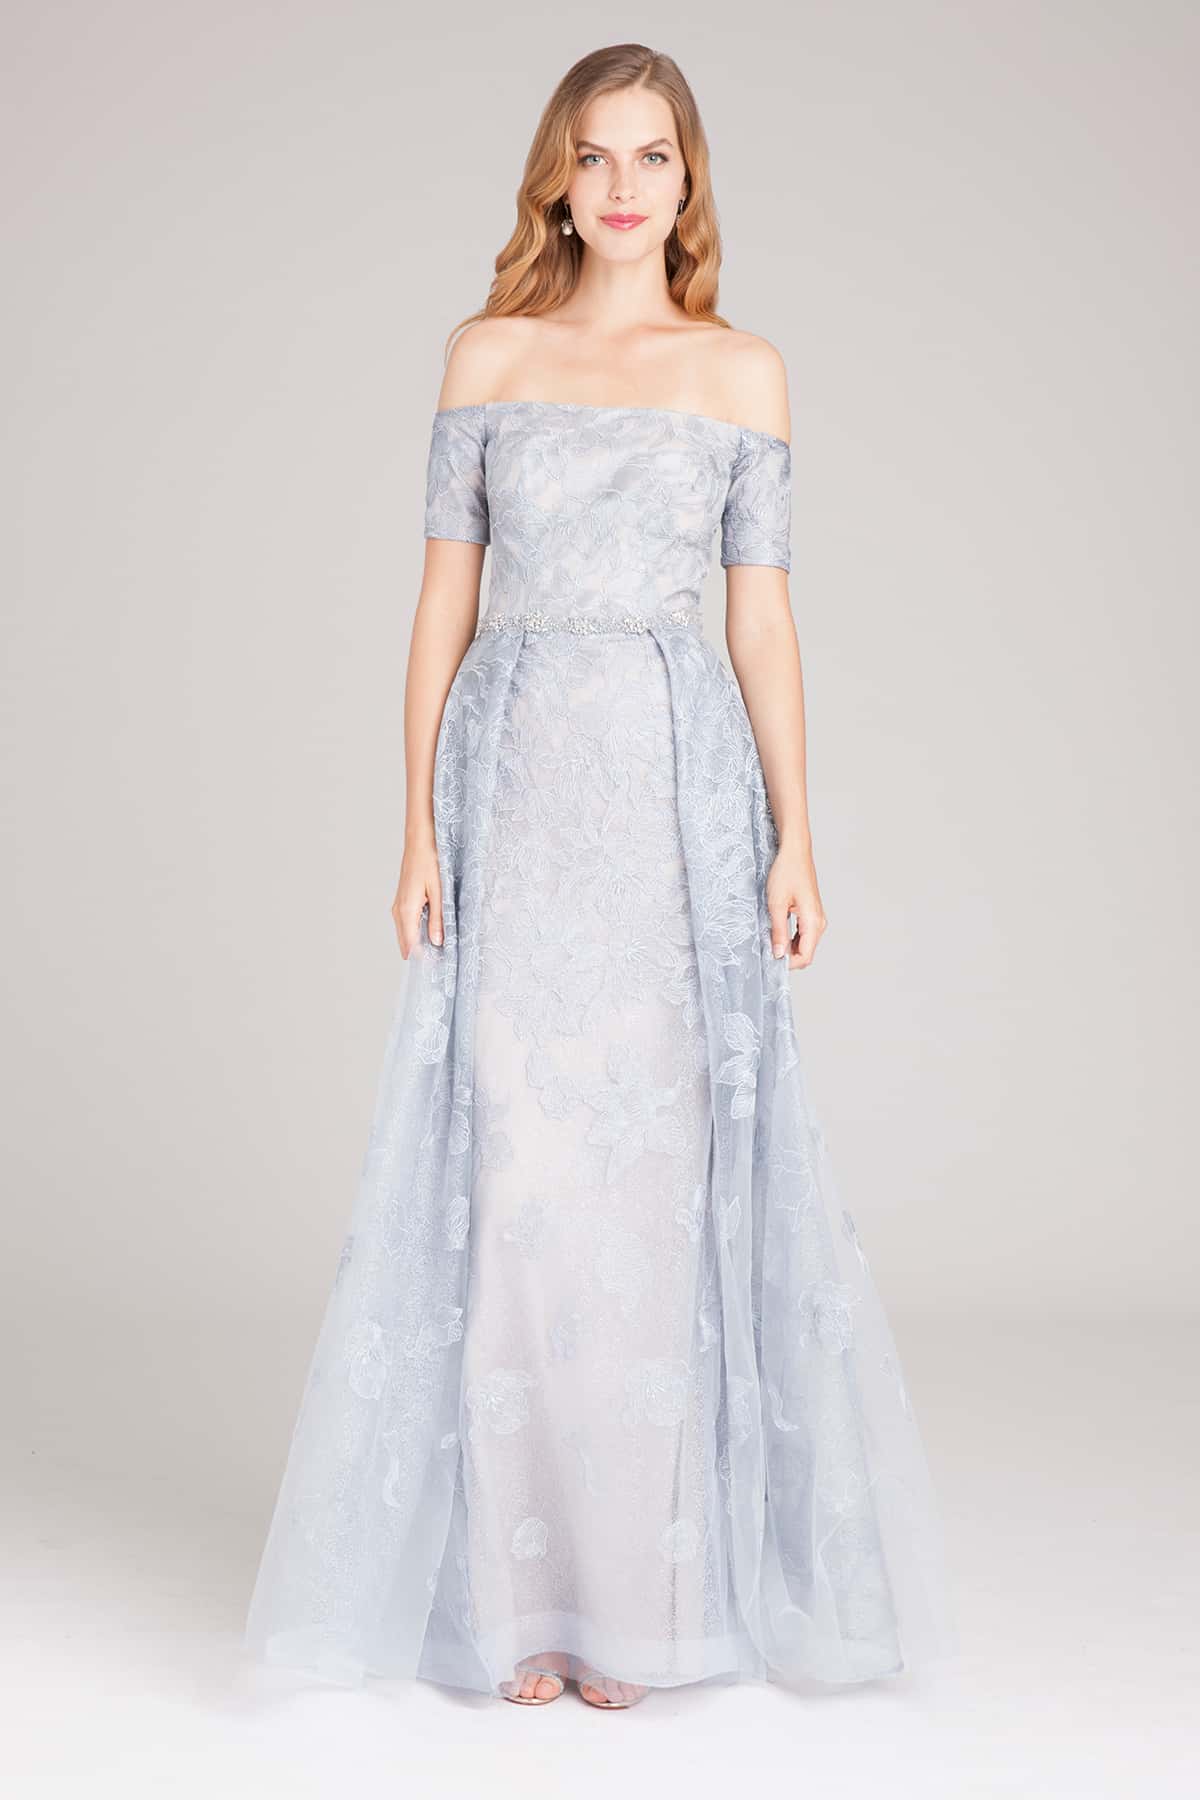 pastel blue dress for wedding